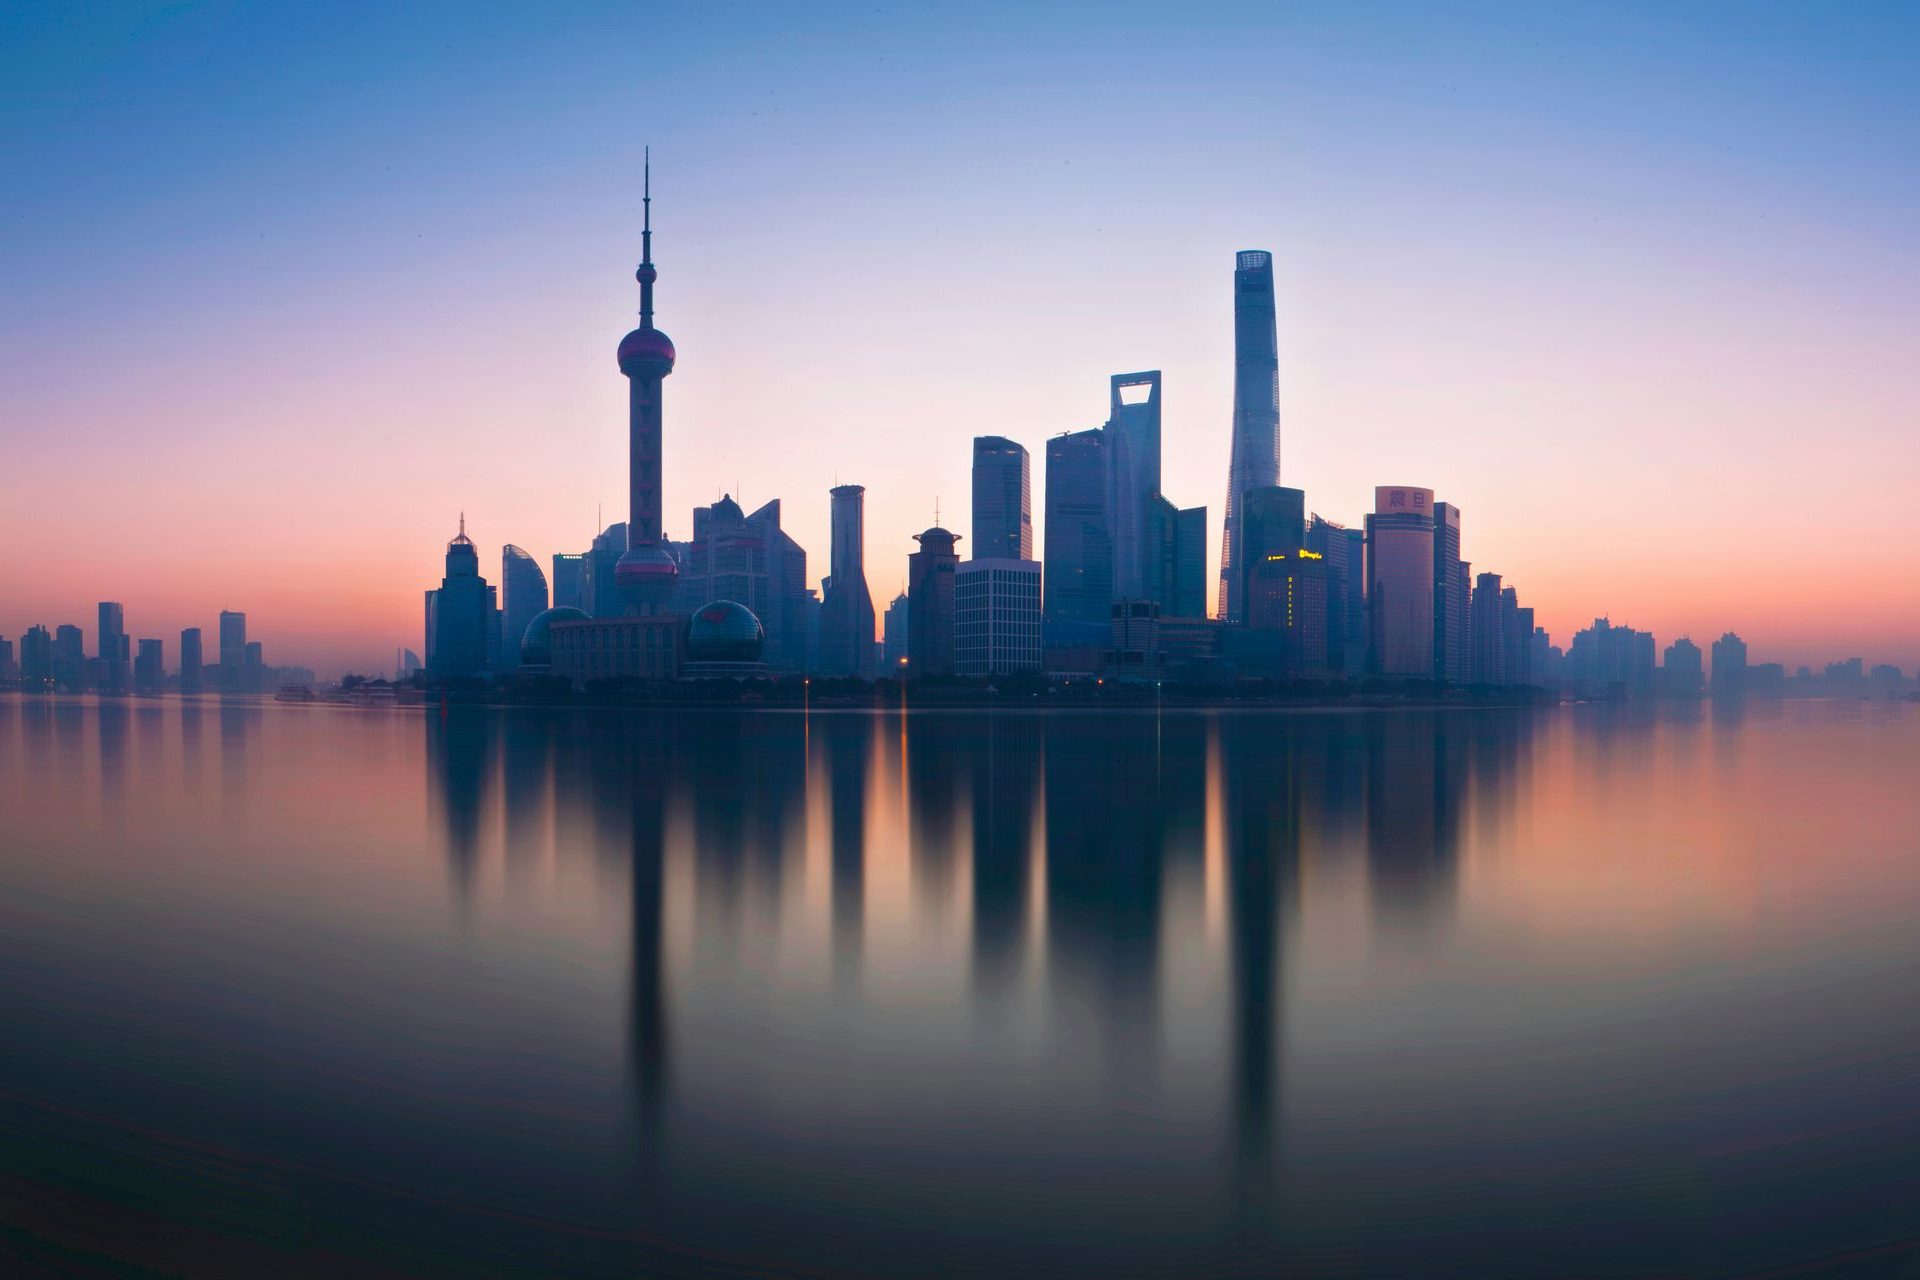 #10 Shanghai (130,100 millionaires)